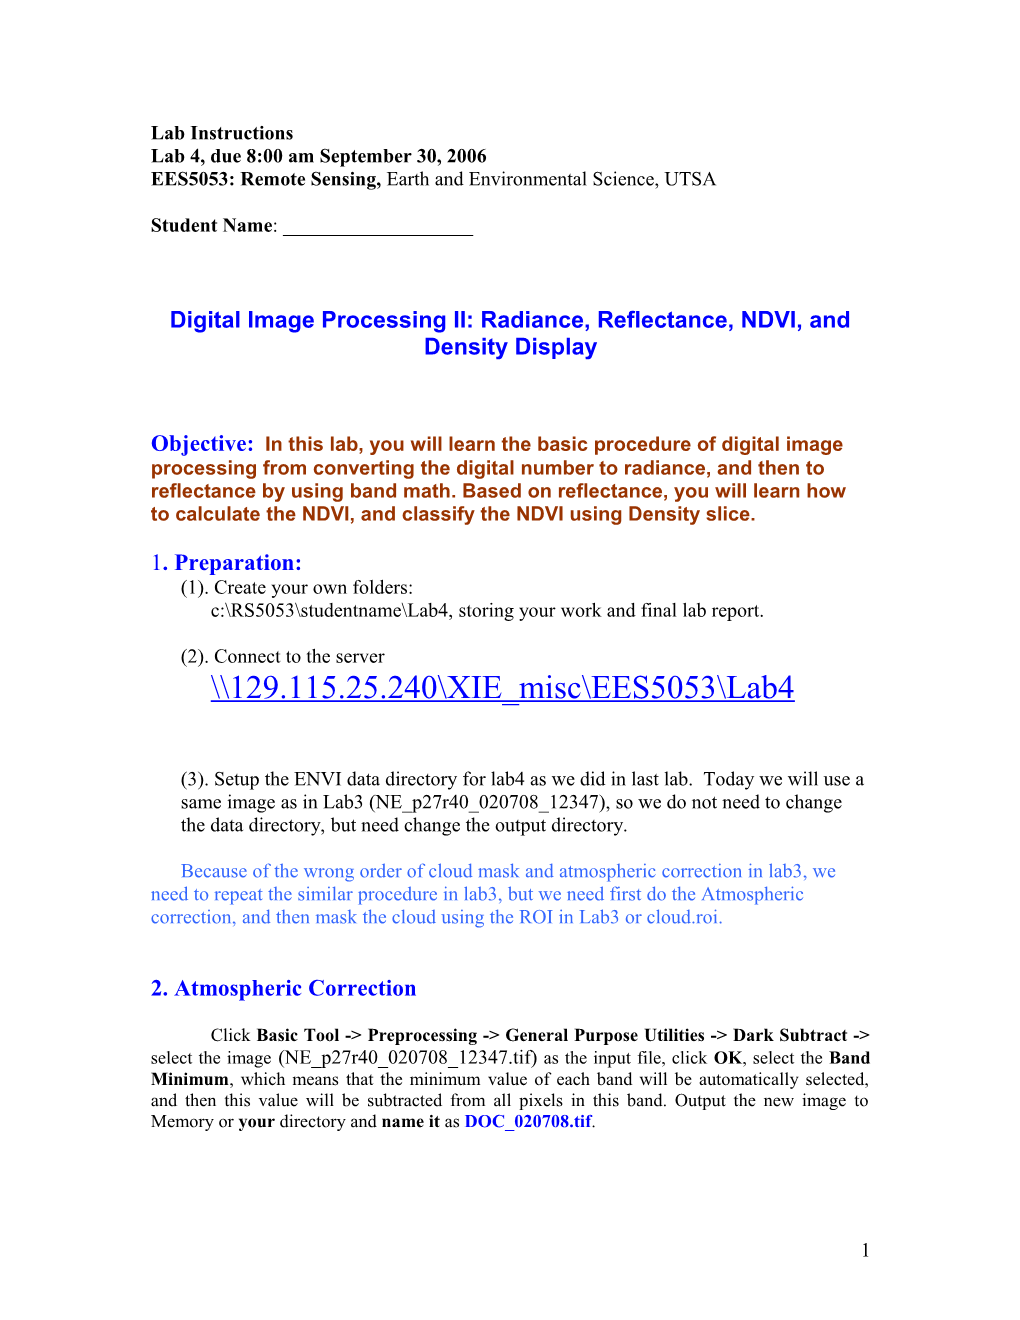 Digital Image Processing II: Radiance, Reflectance,NDVI, and Density Display